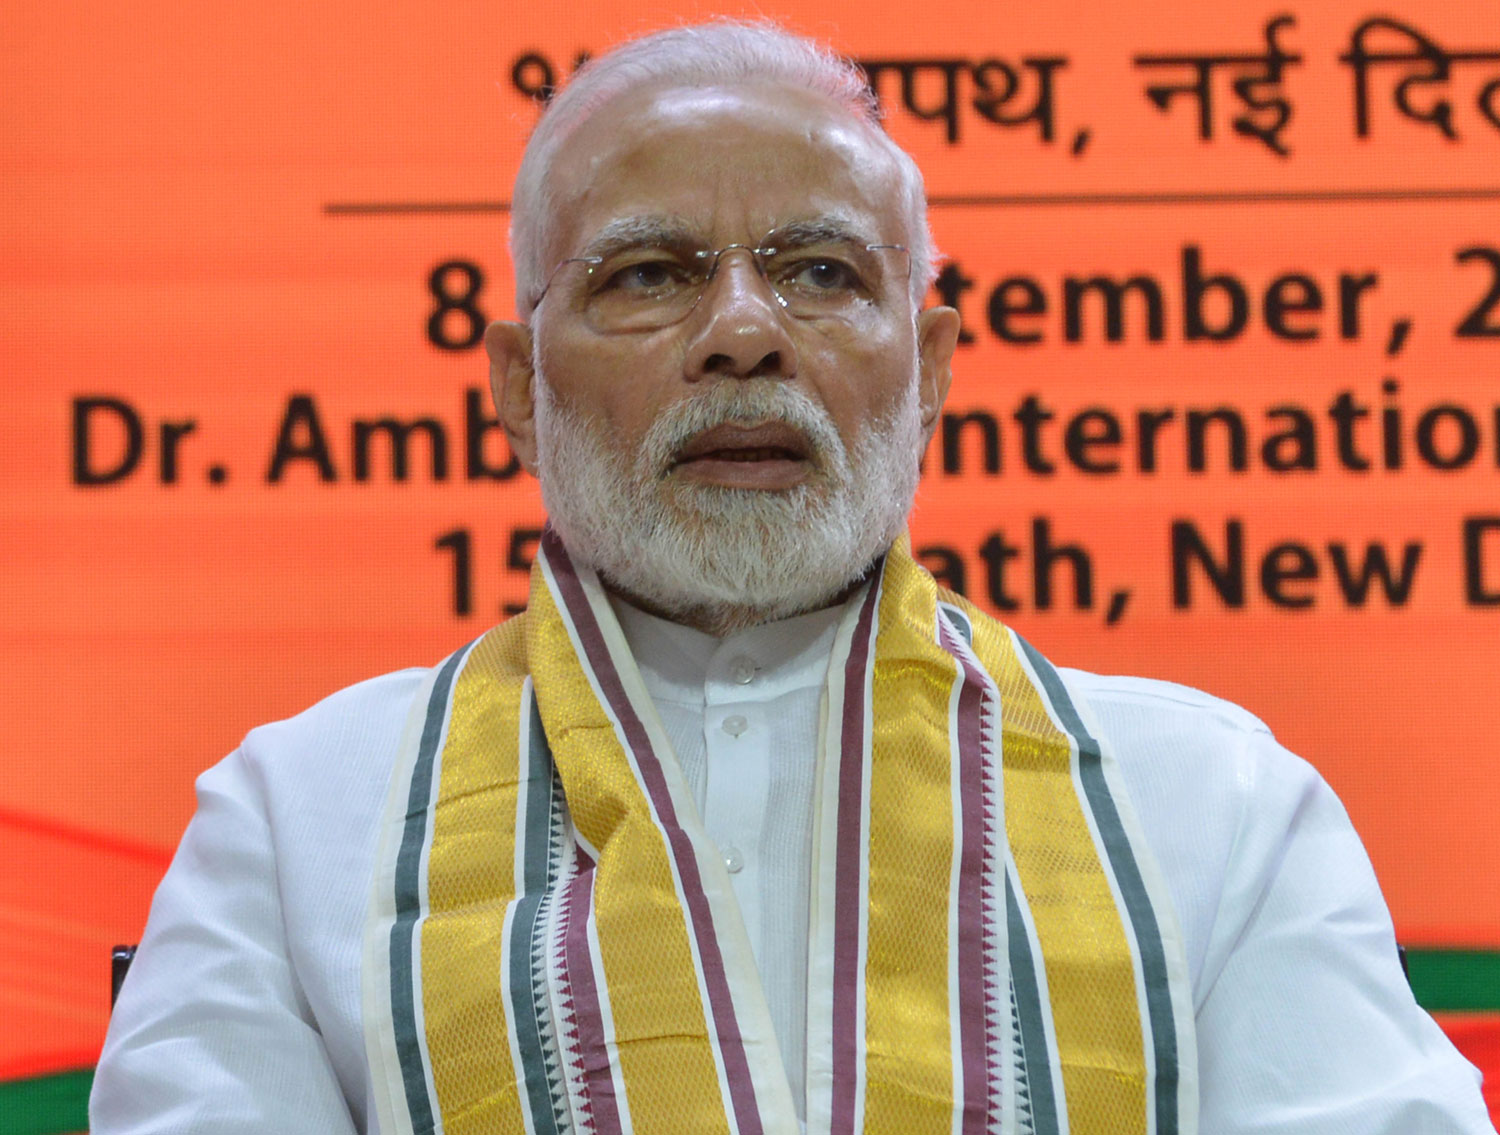 Academics question Modi's claim of autonomy - Telegraph India